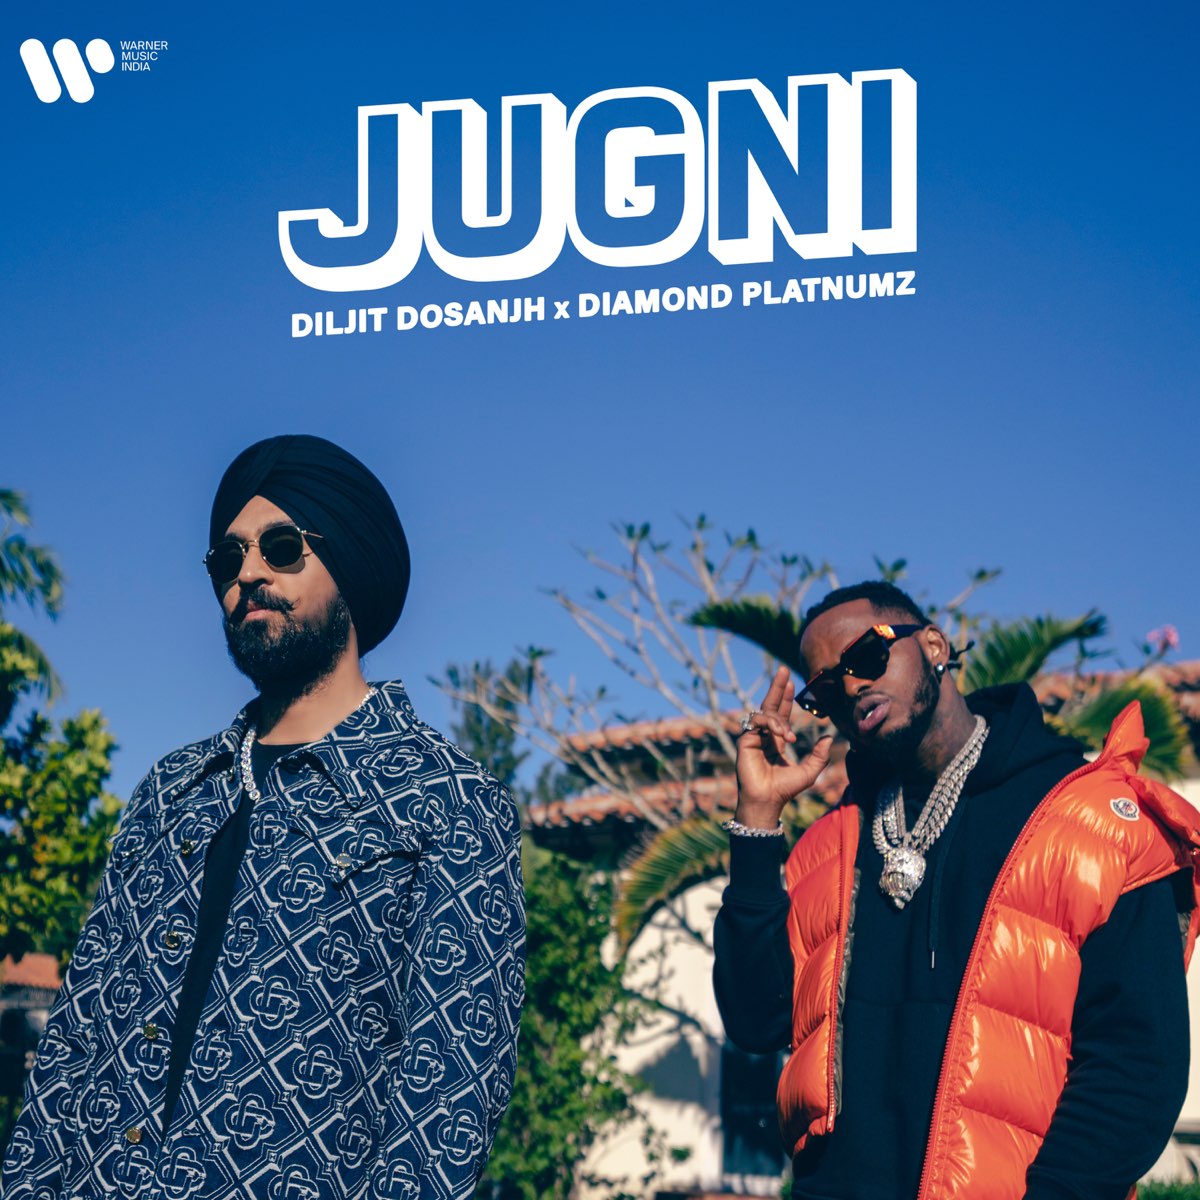 Jugni - Single - Album by Diljit Dosanjh & Diamond Platnumz - Apple Music